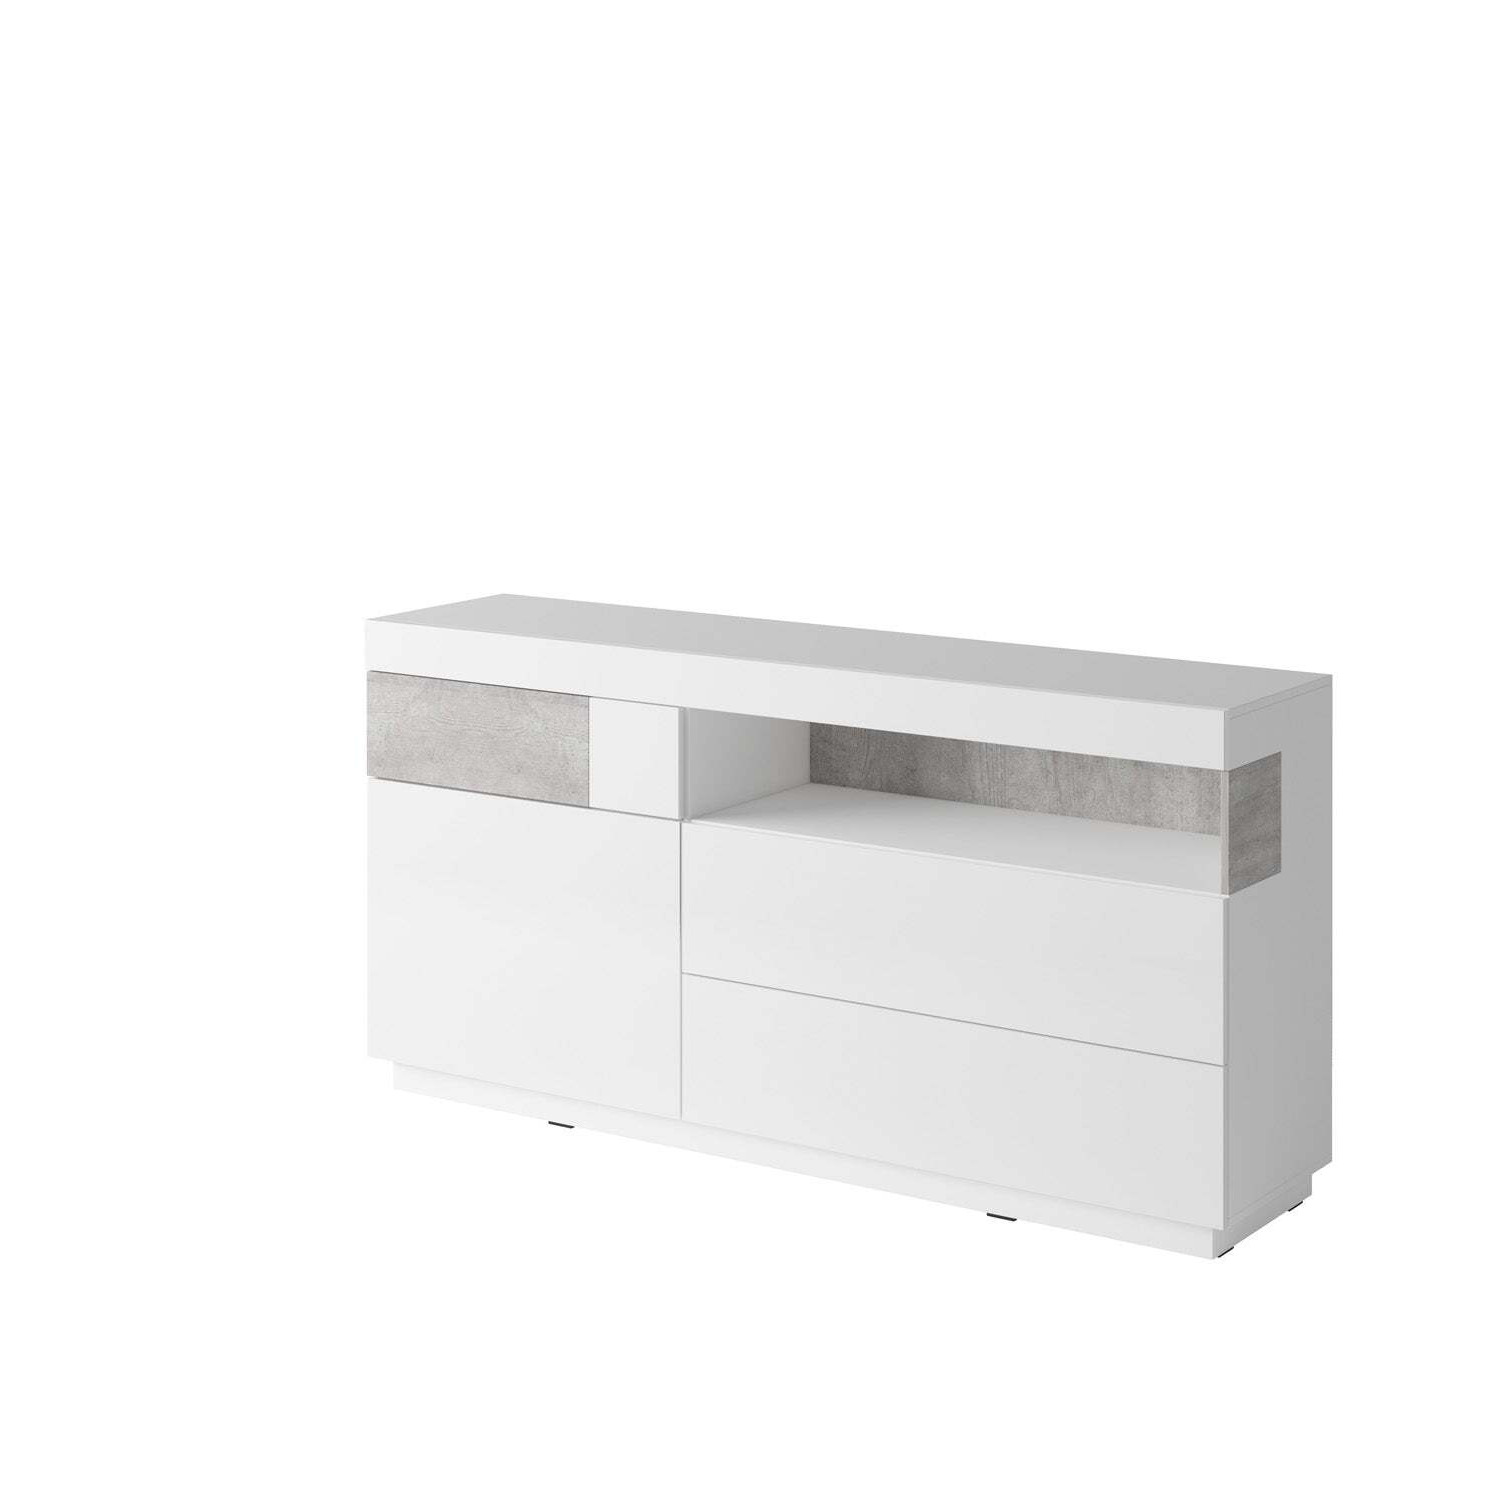 Silke 47 Sideboard Cabinet 169cm - White Gloss / Concrete Grey 169cm - image 1